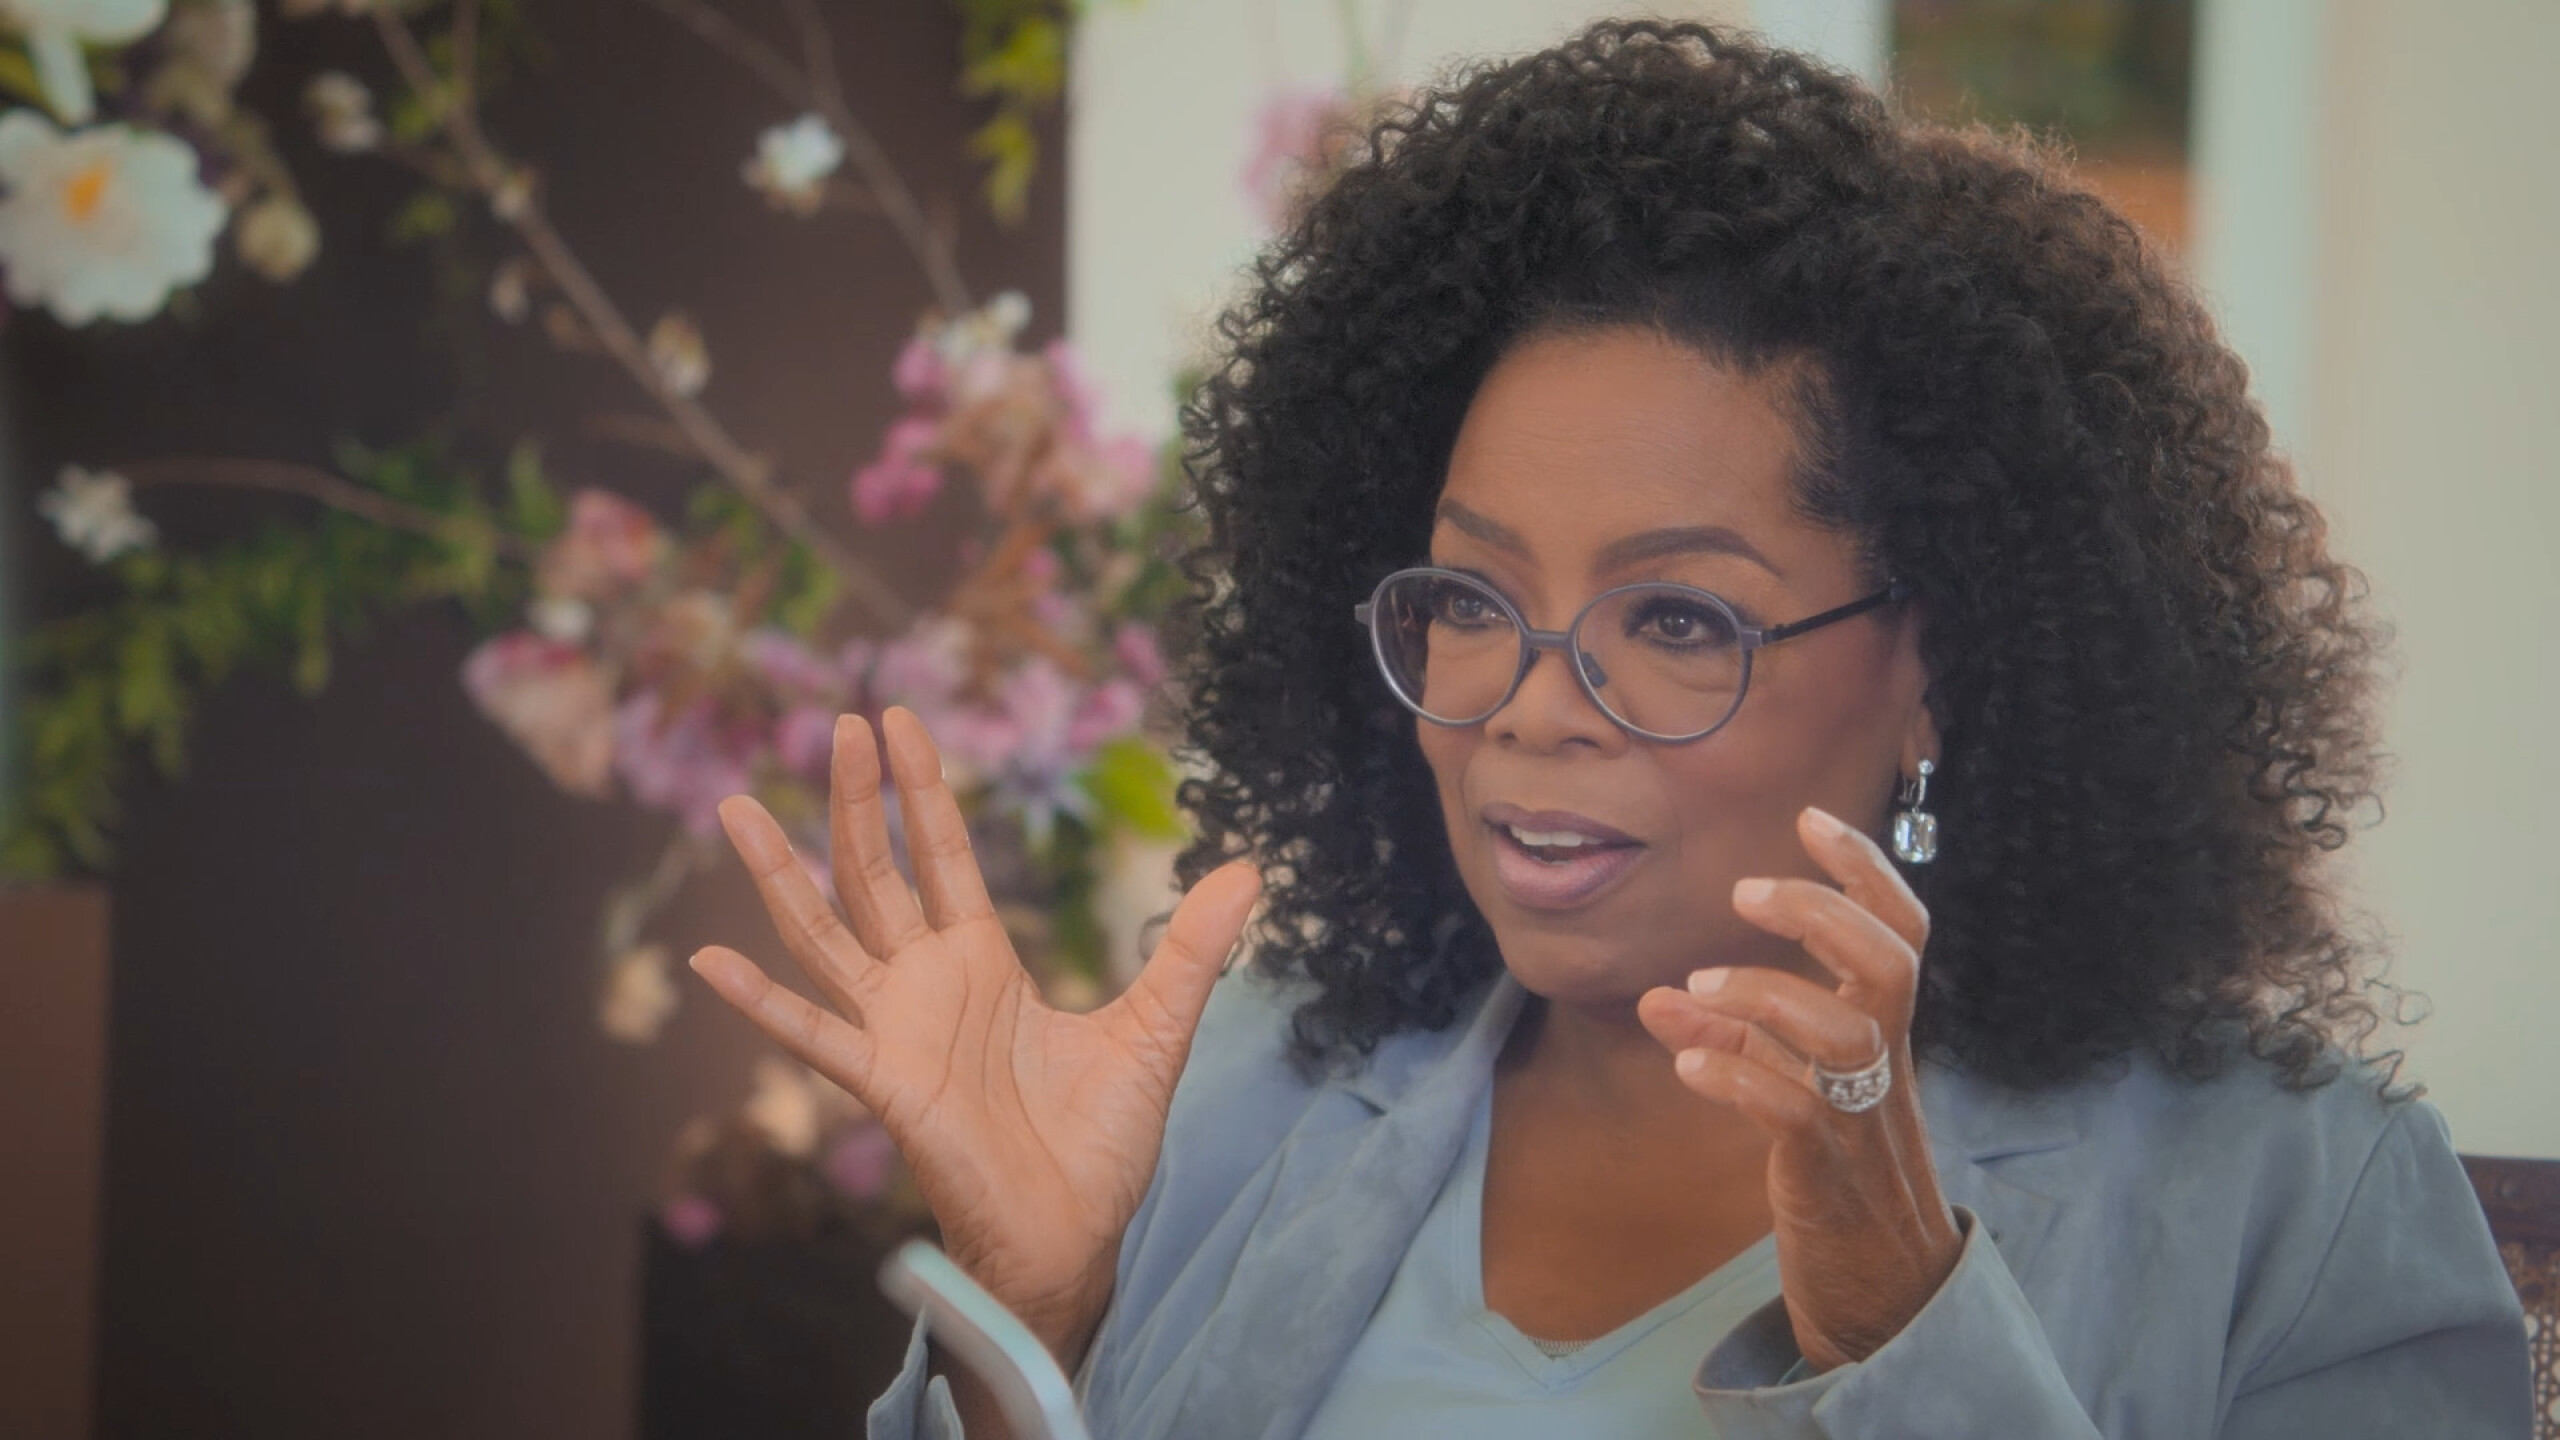 A Time When Oprah Thought She Wasn't Pretty Enough